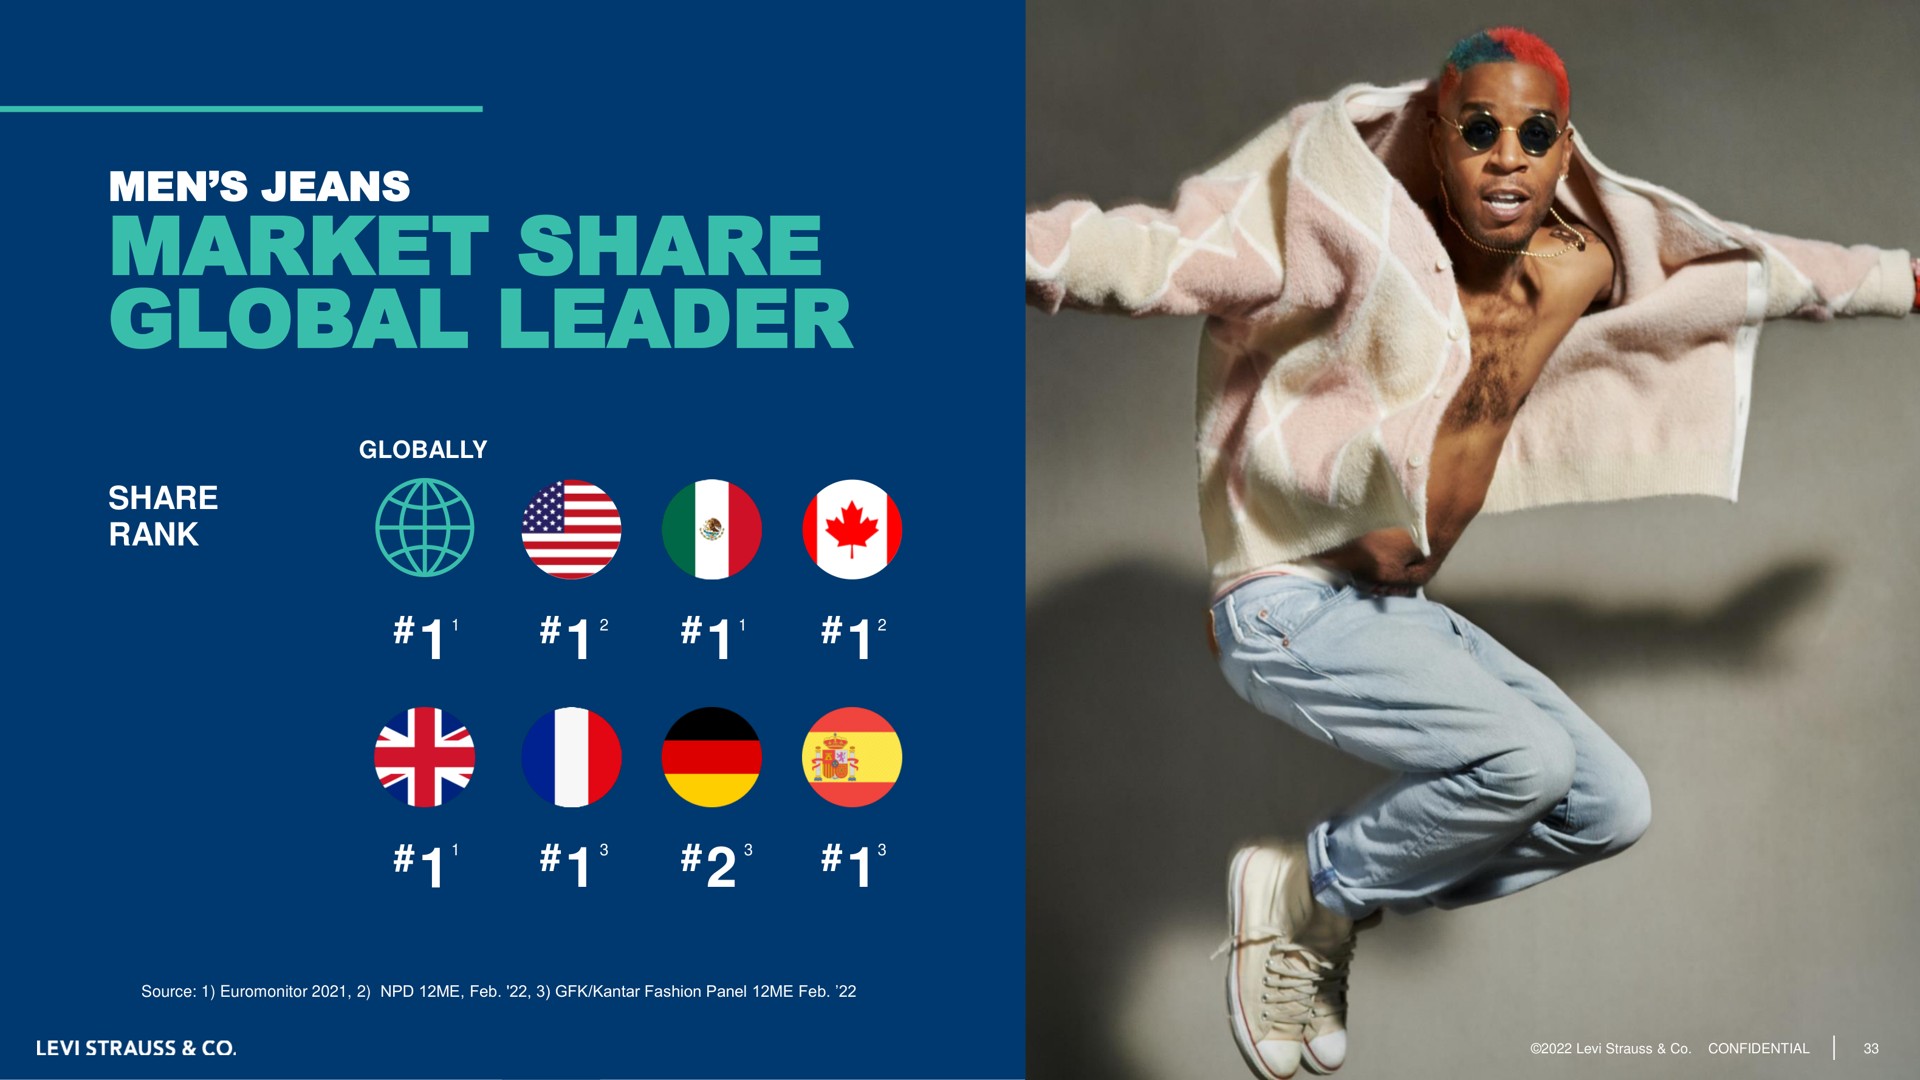 men jeans market share global leader net rank | Levi Strauss